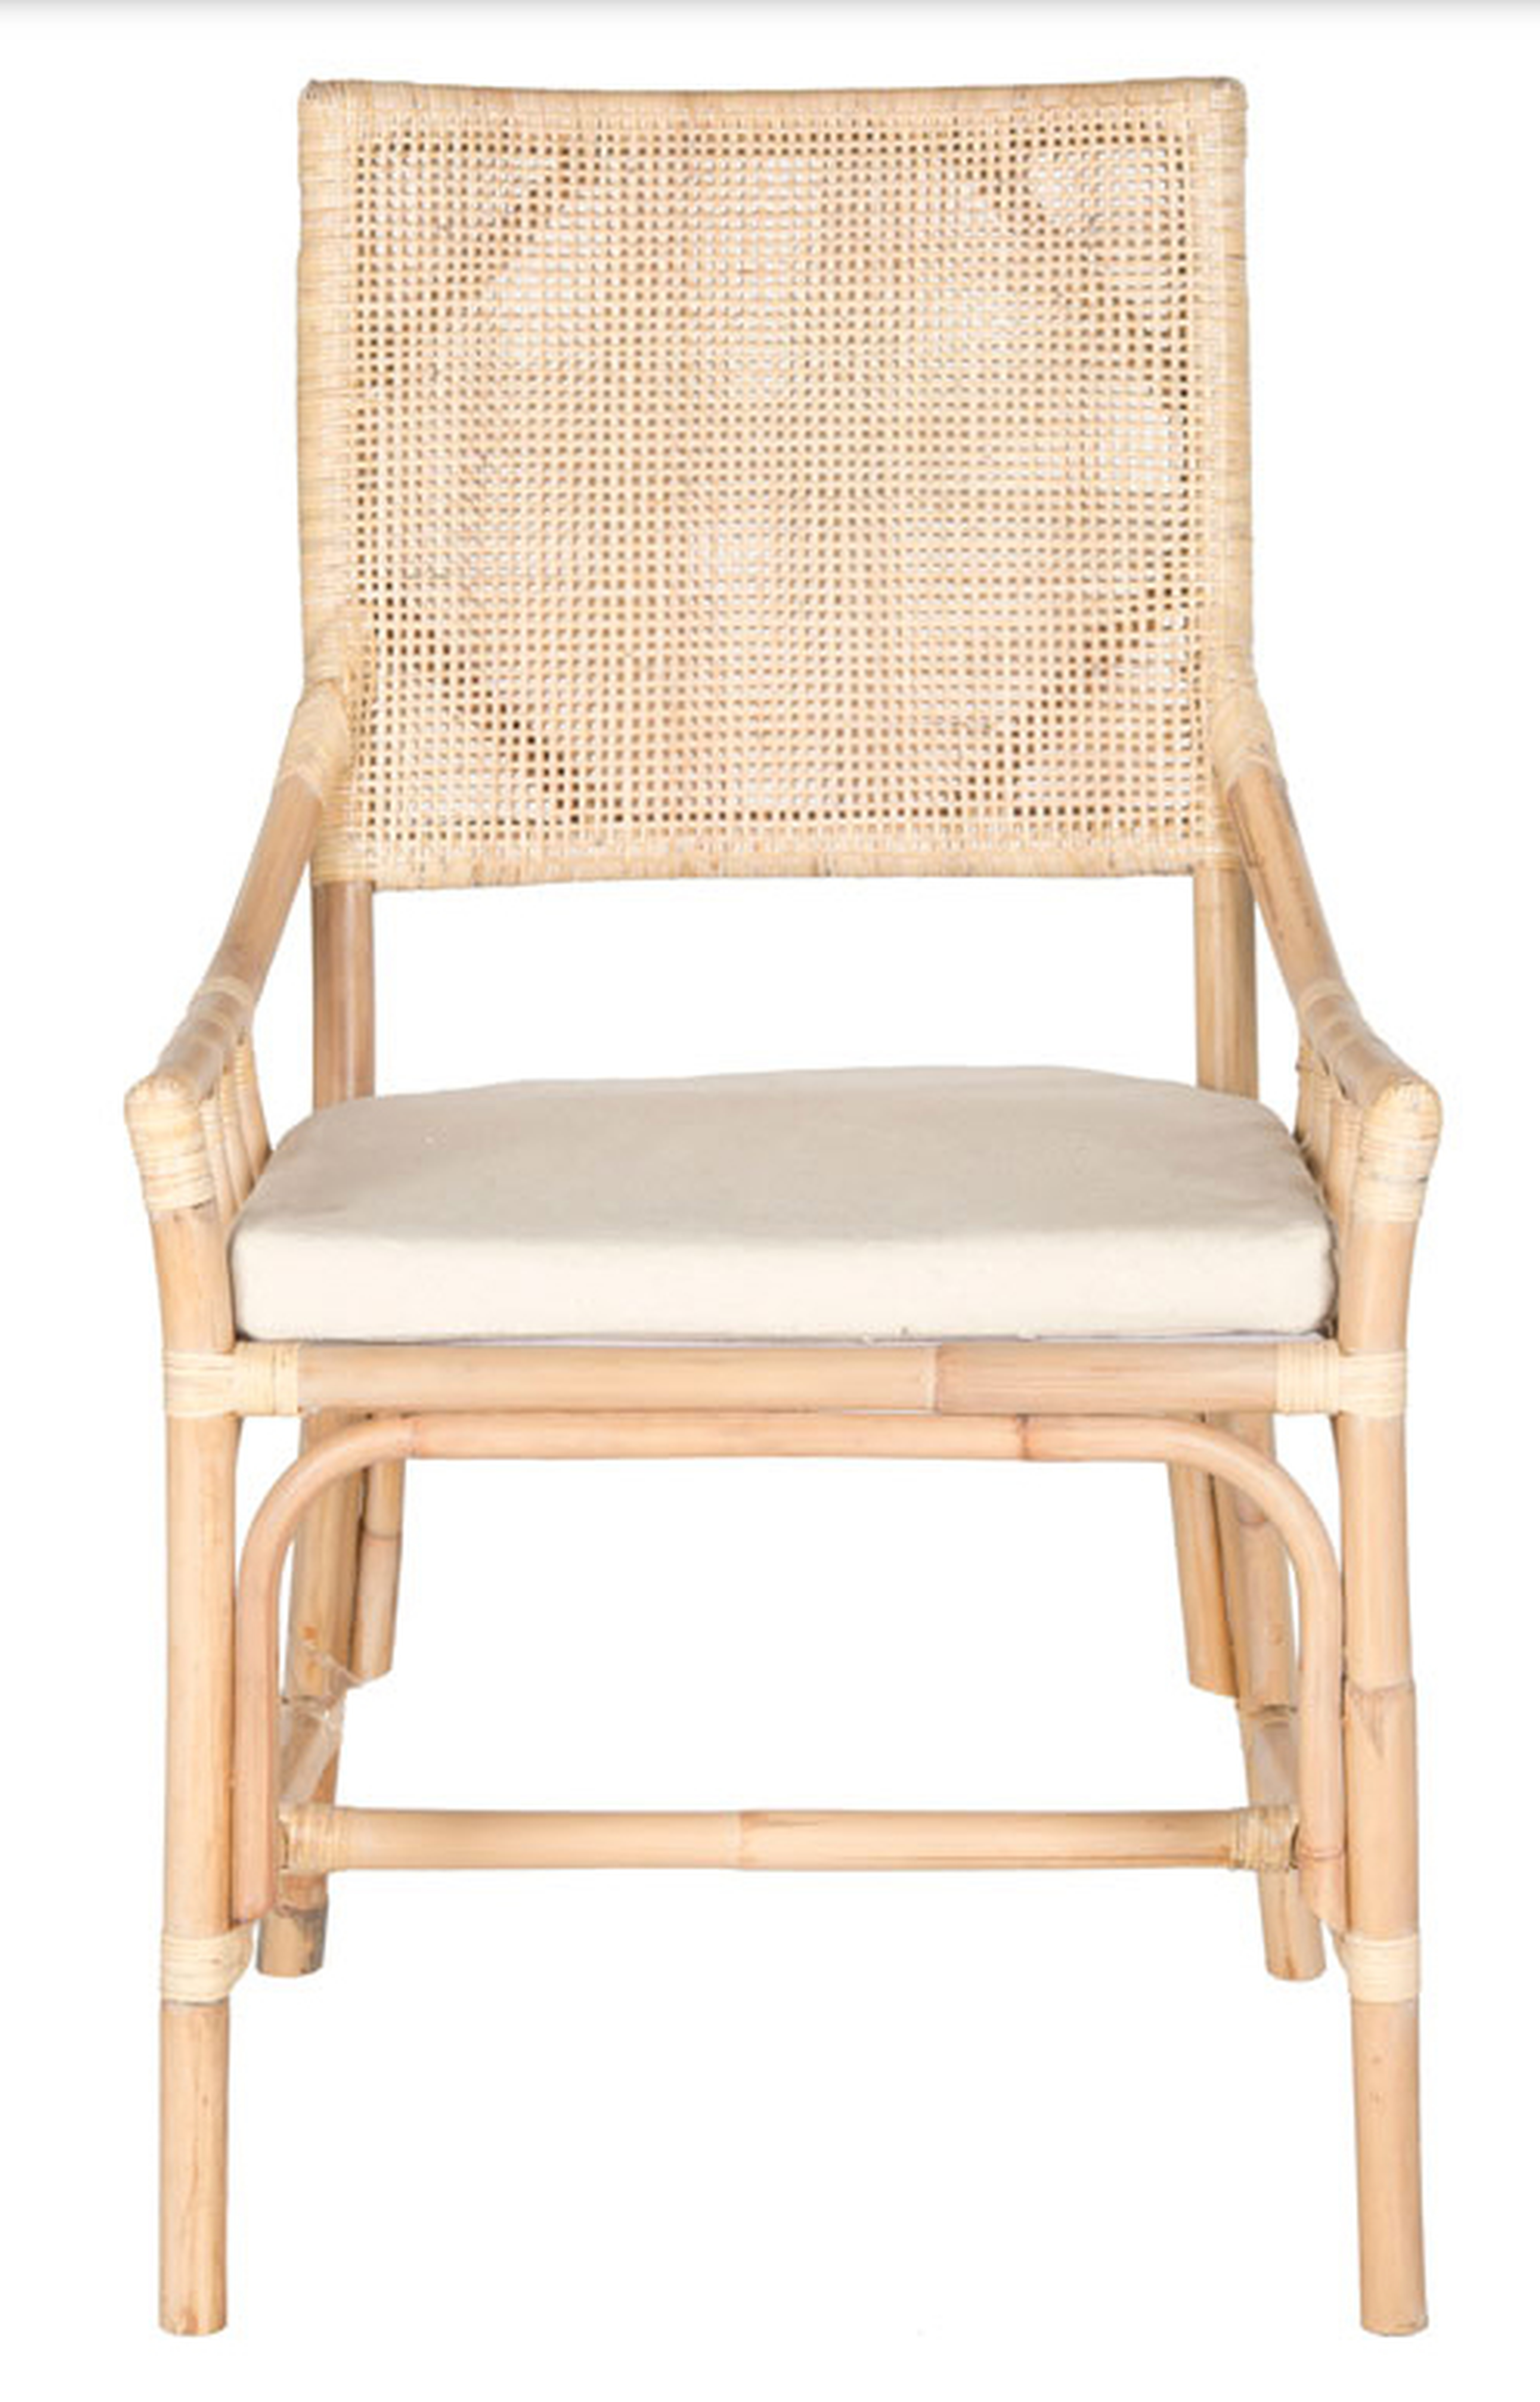 Donatella Rattan Chair - Natural White Wash - Arlo Home - Arlo Home